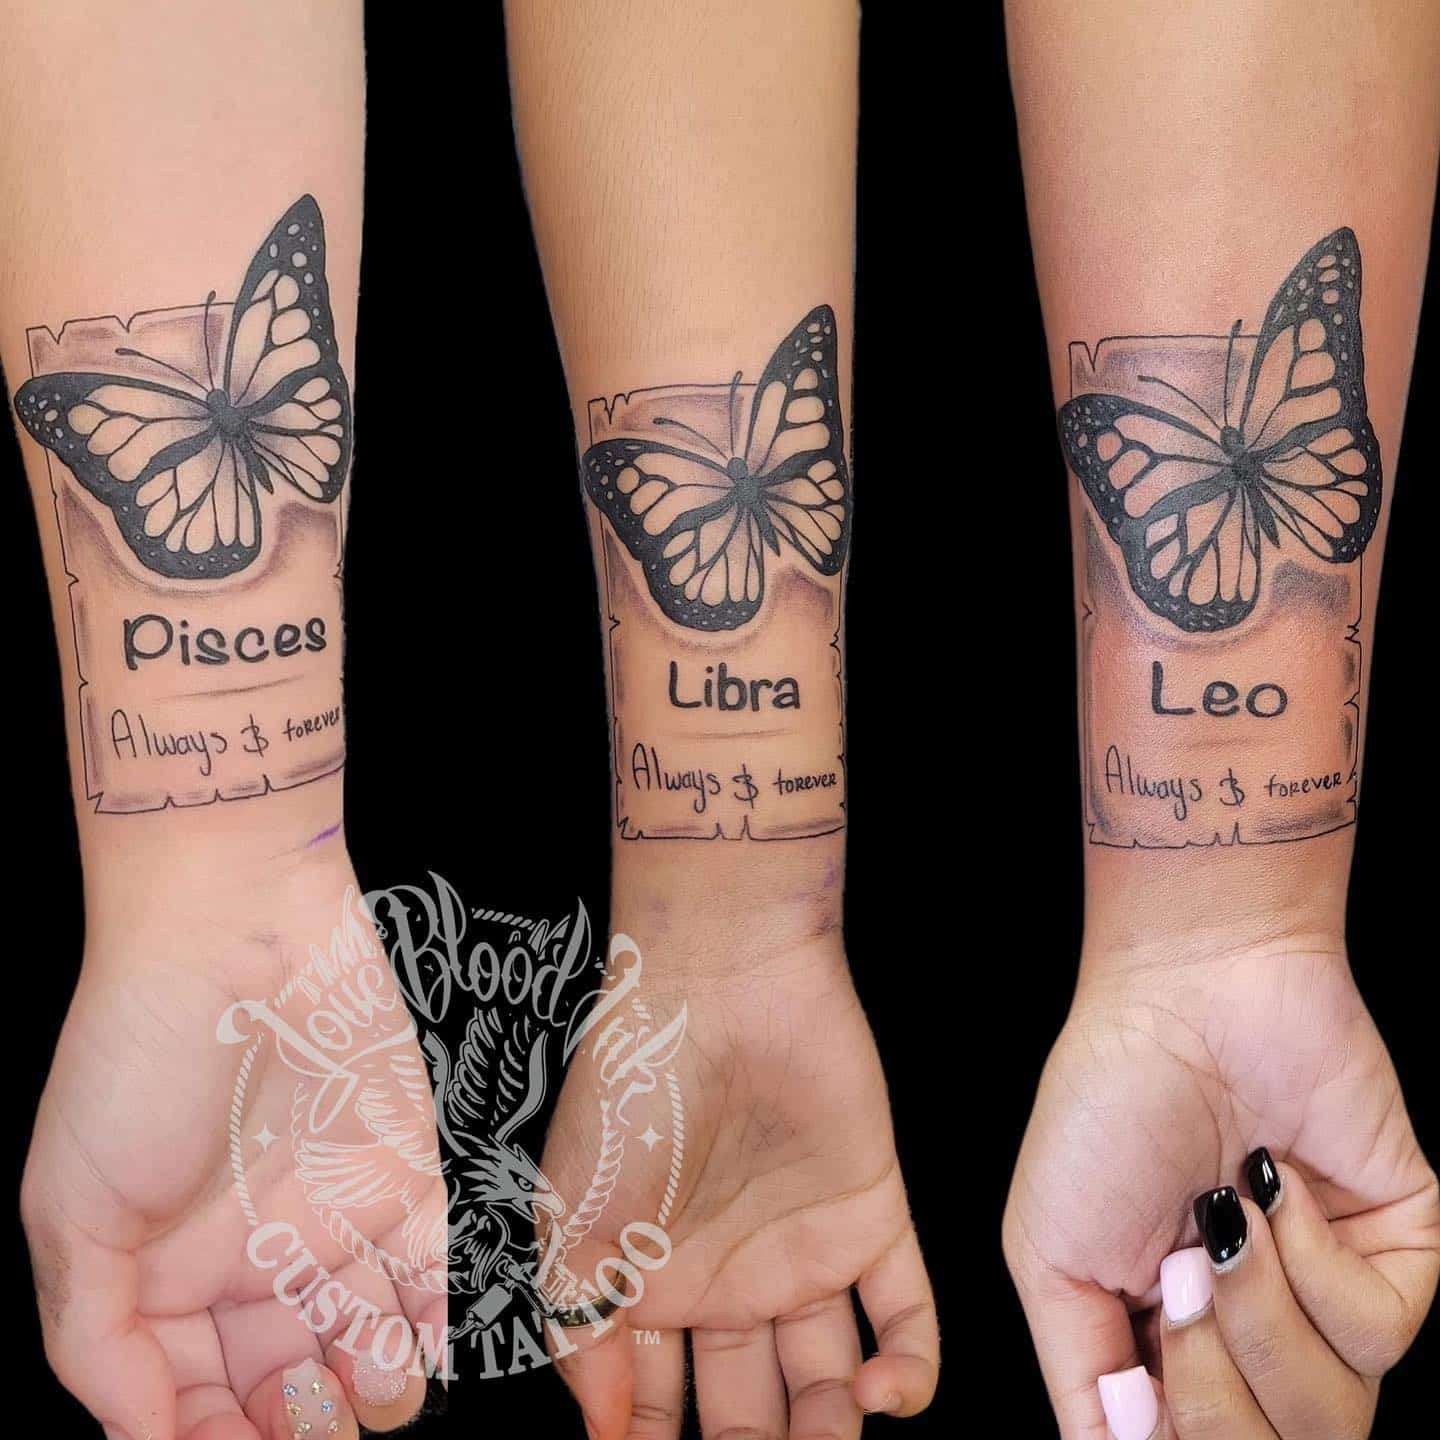 Zodiac matching tattoo for 3 besties